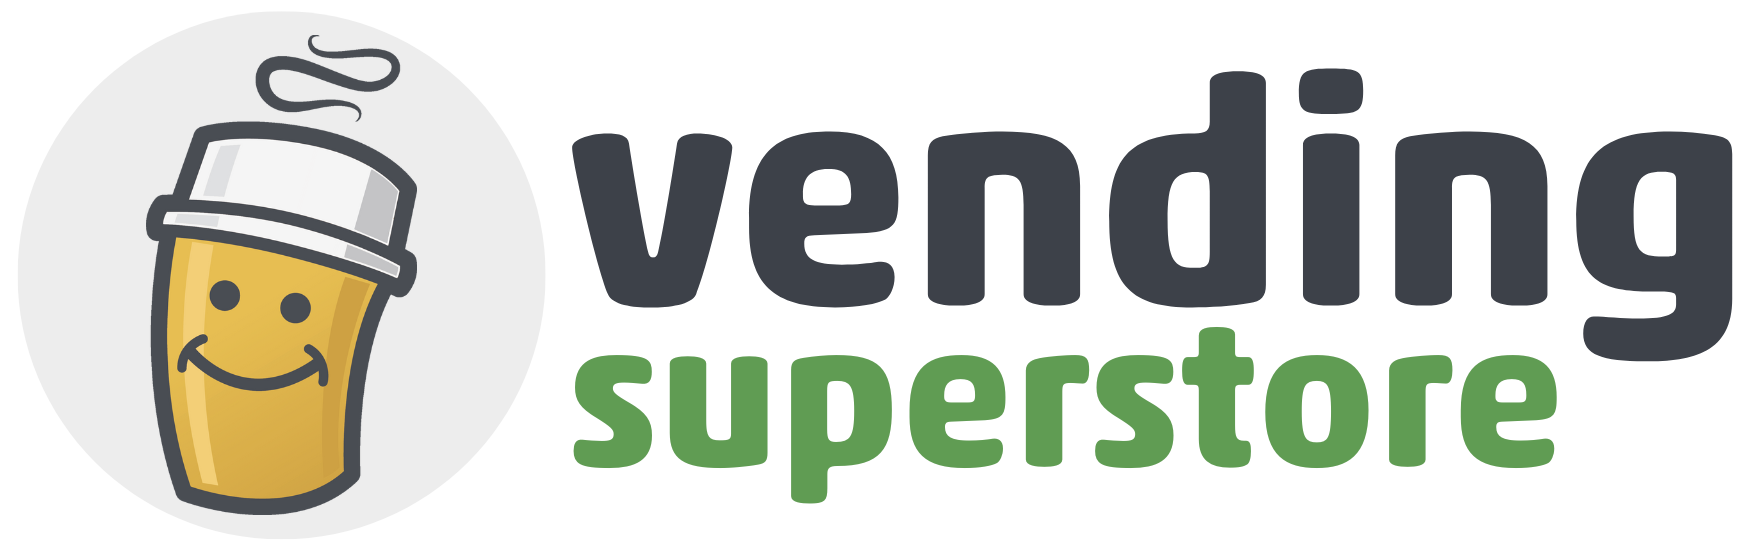 Vending Superstore logo